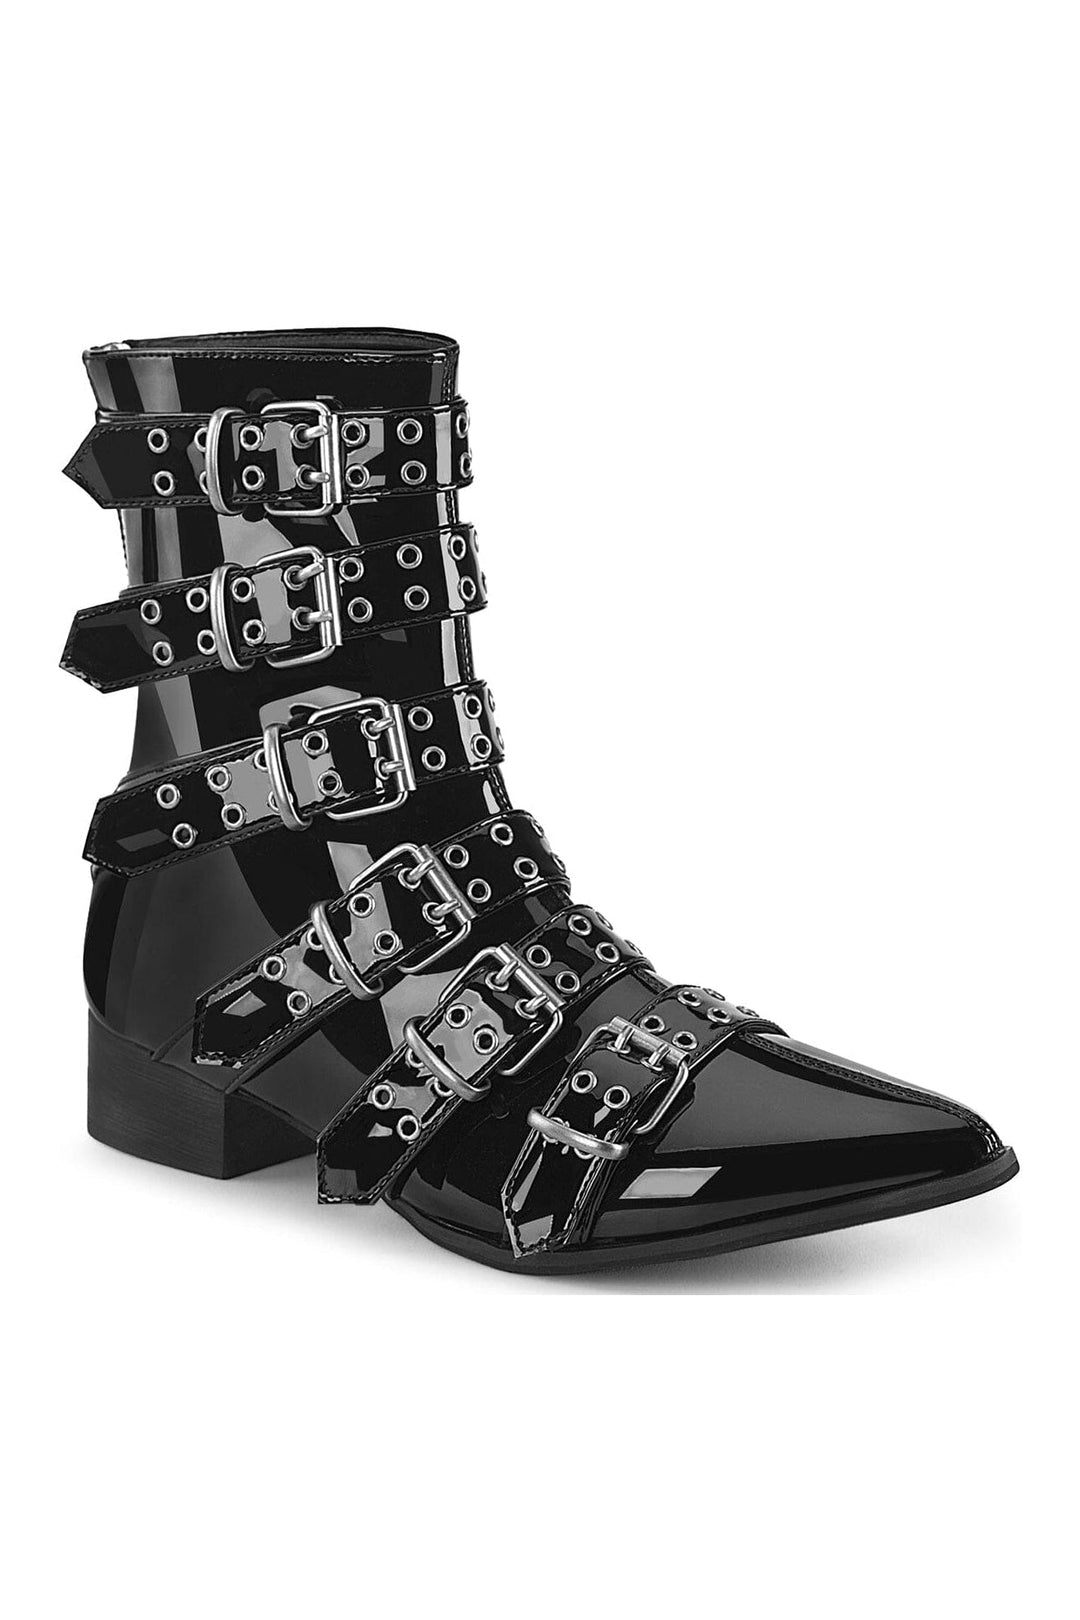 WARLOCK-70 Black Patent Knee Boot-Knee Boots-Demonia-Black-10-Patent-SEXYSHOES.COM